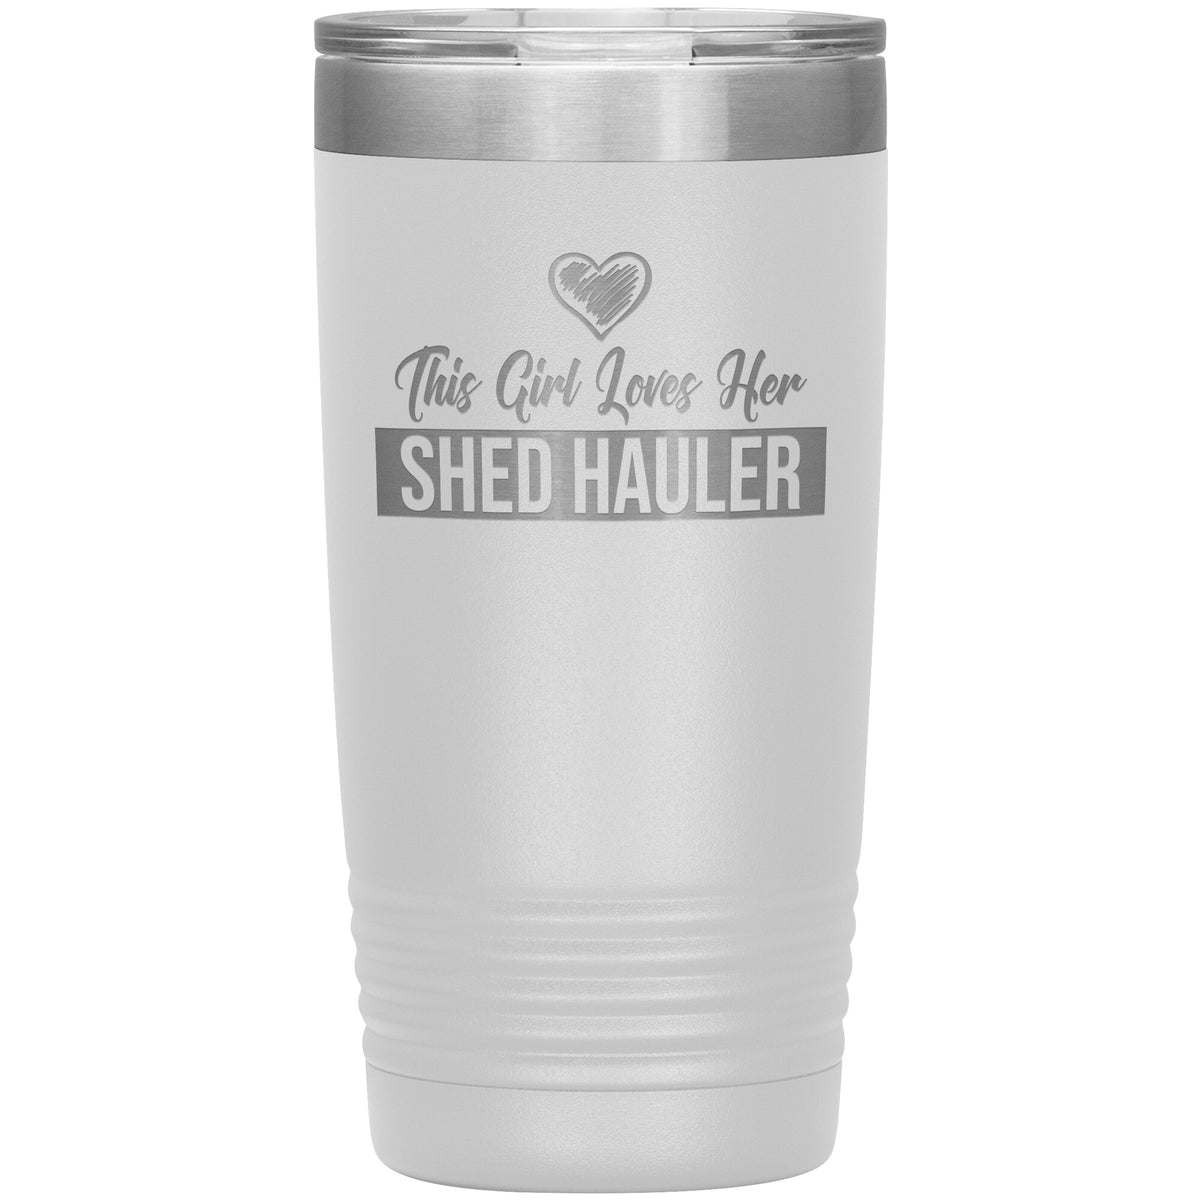 This Girl Loves Her - Shed Hauler - 20oz Tumbler - Free Shipping